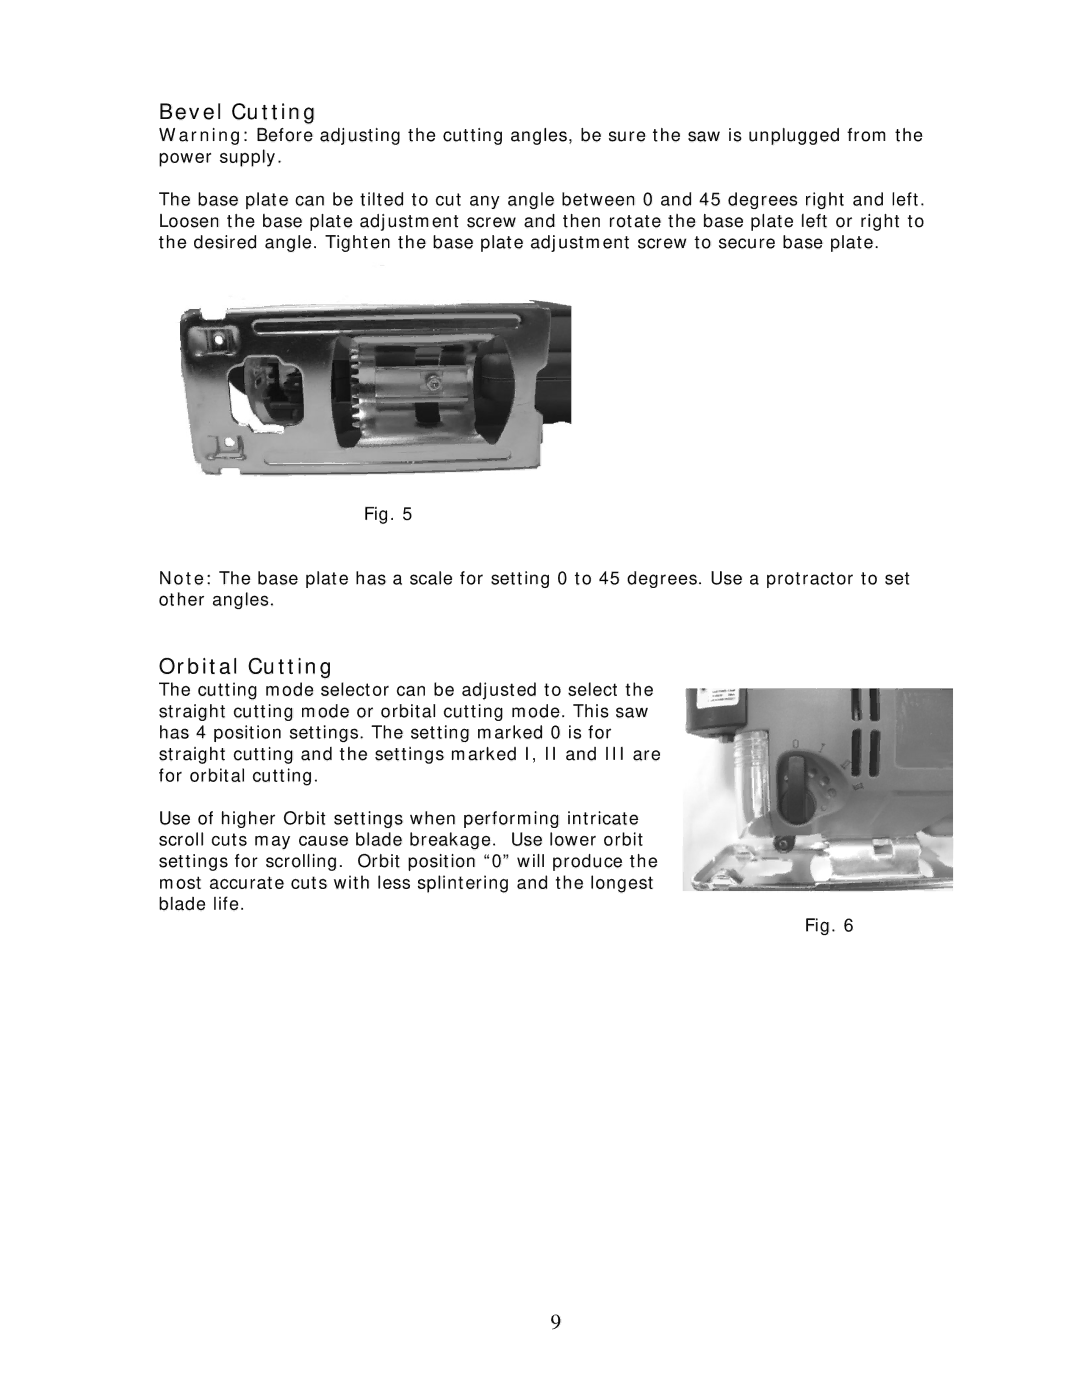 Wachsmuth & Krogmann MIQ-FE-65 manual Bevel Cutting, Orbital Cutting 